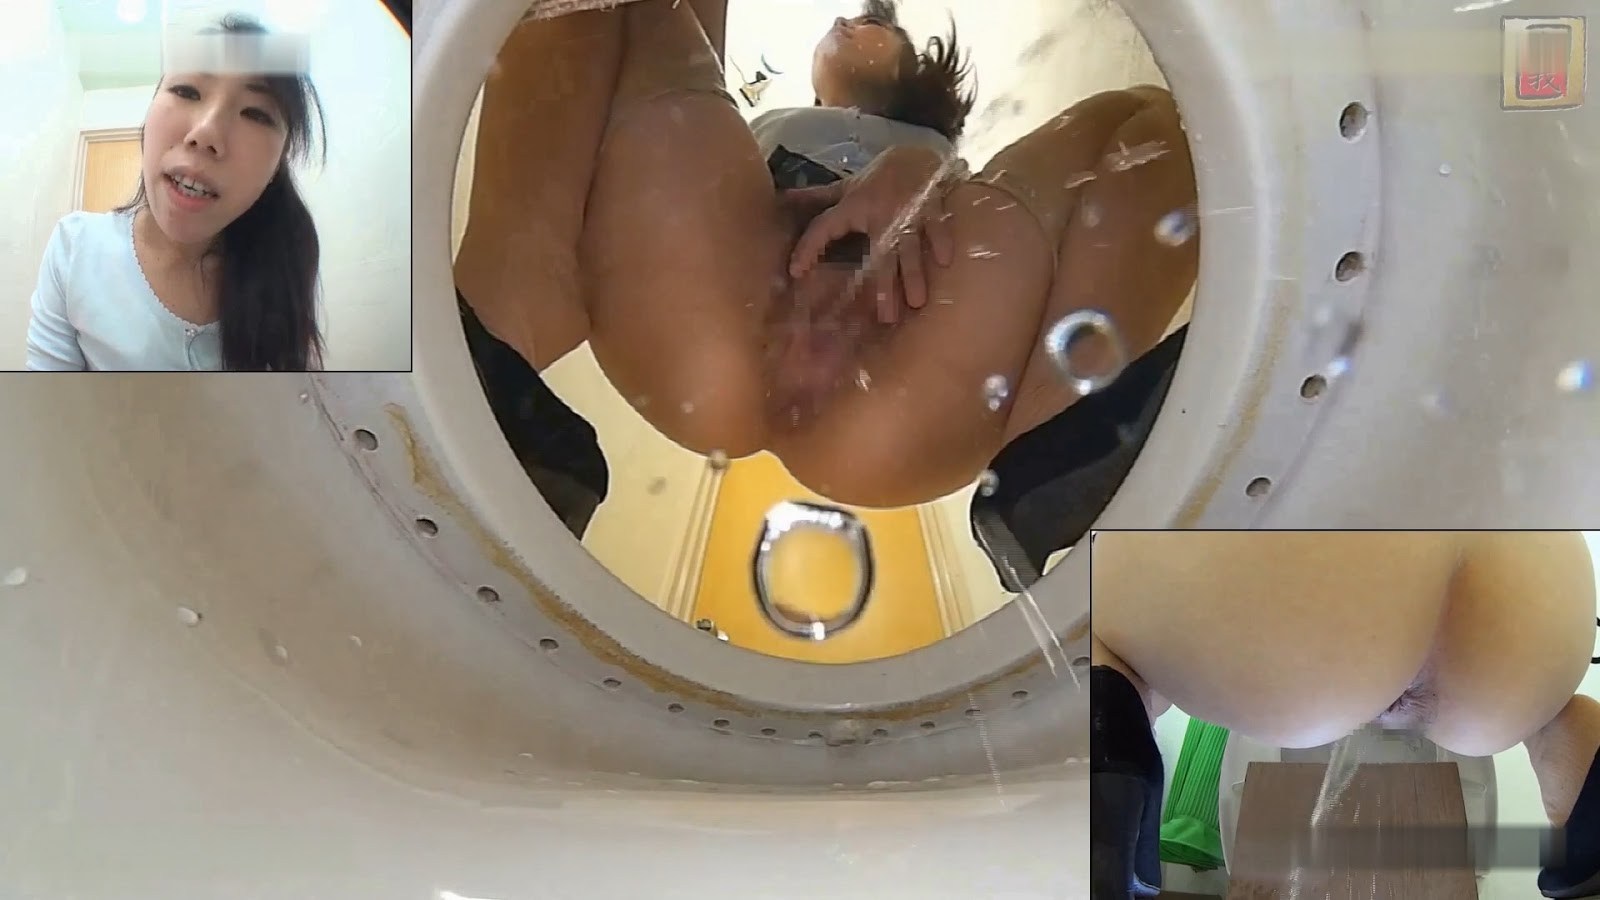 https://motherlesspics.com/uploads/posts/2023-02/1676765715_motherlesspics-com-p-porn-hidden-camera-in-the-toilet-close-up-39.jpg